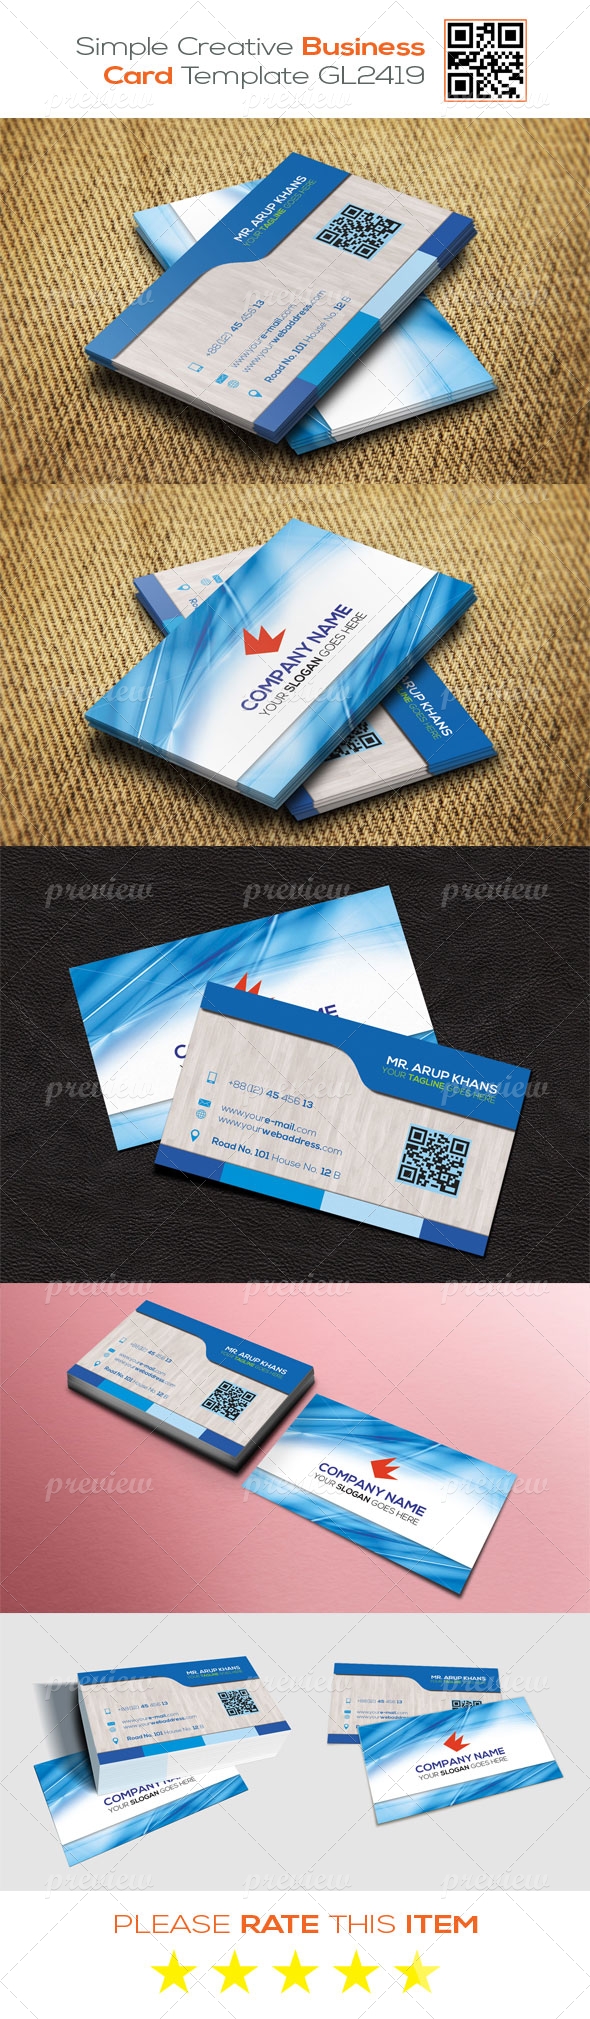 Simple Creative Business Card Template GL2419